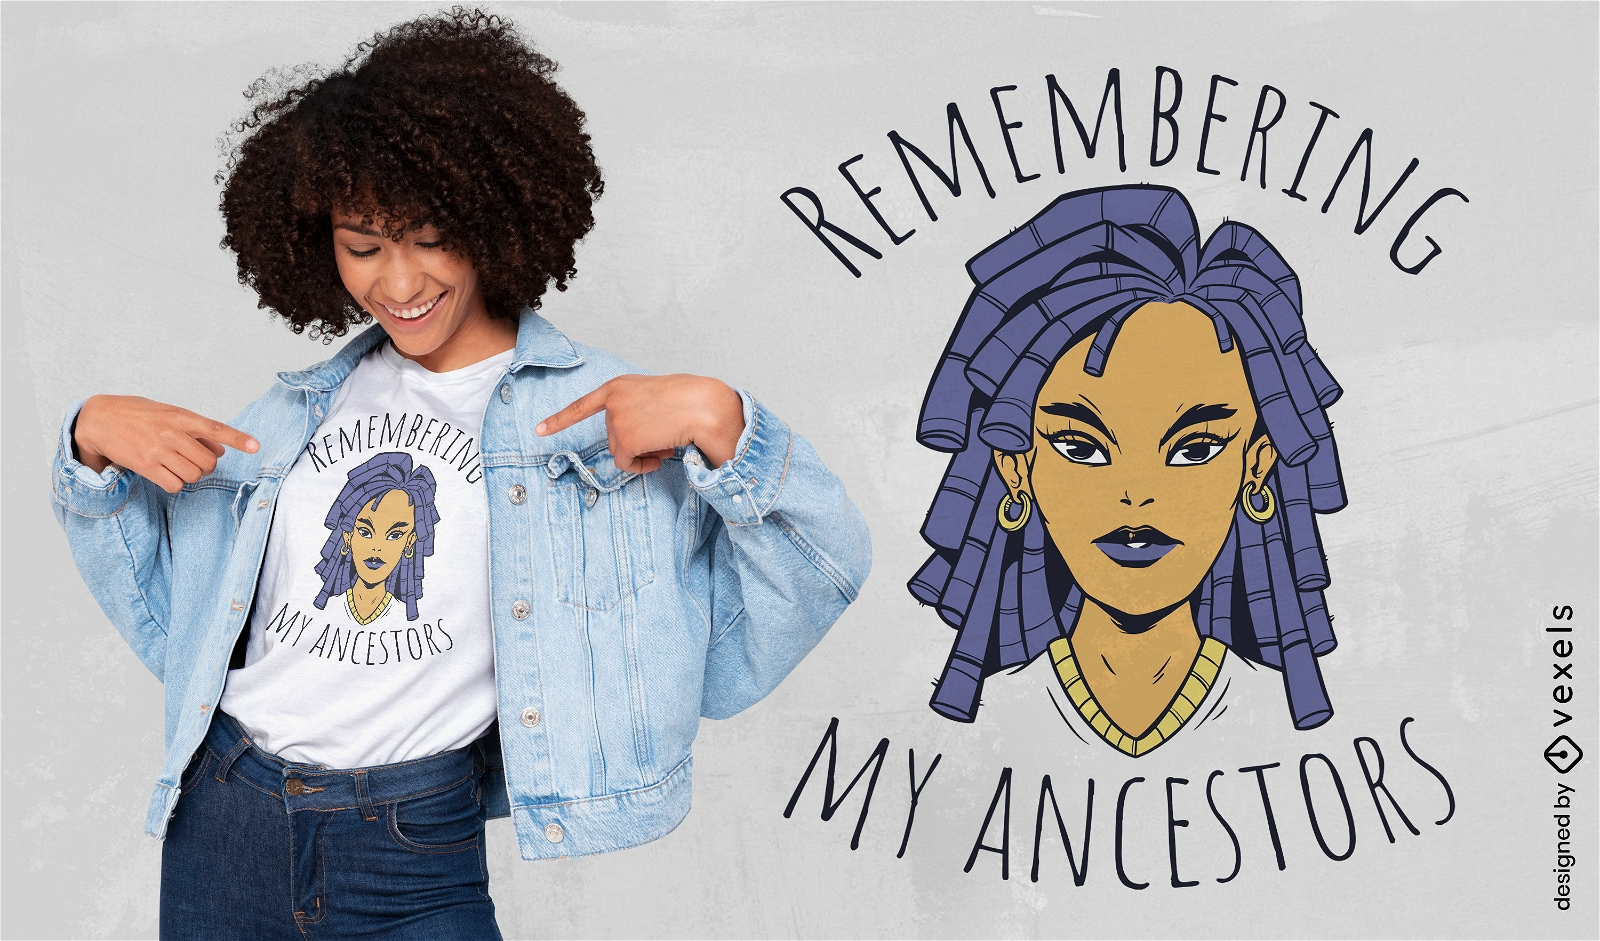 Black history ancestors quote t-shirt design